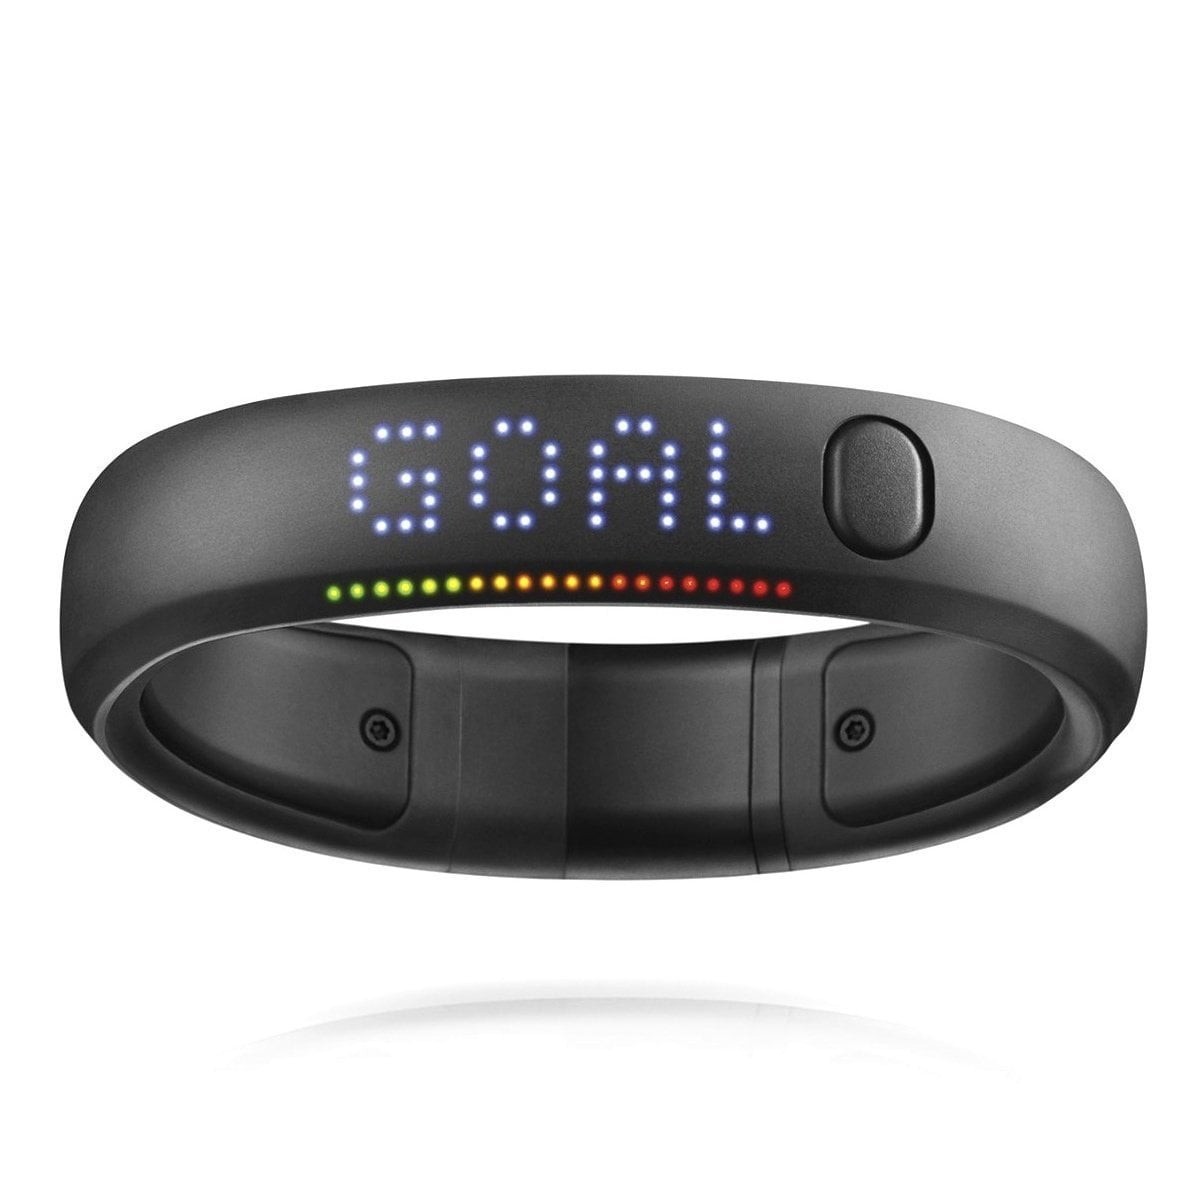 Nike+ FuelBand SE | Fitness watch tracker, Fitness gadgets, Nike